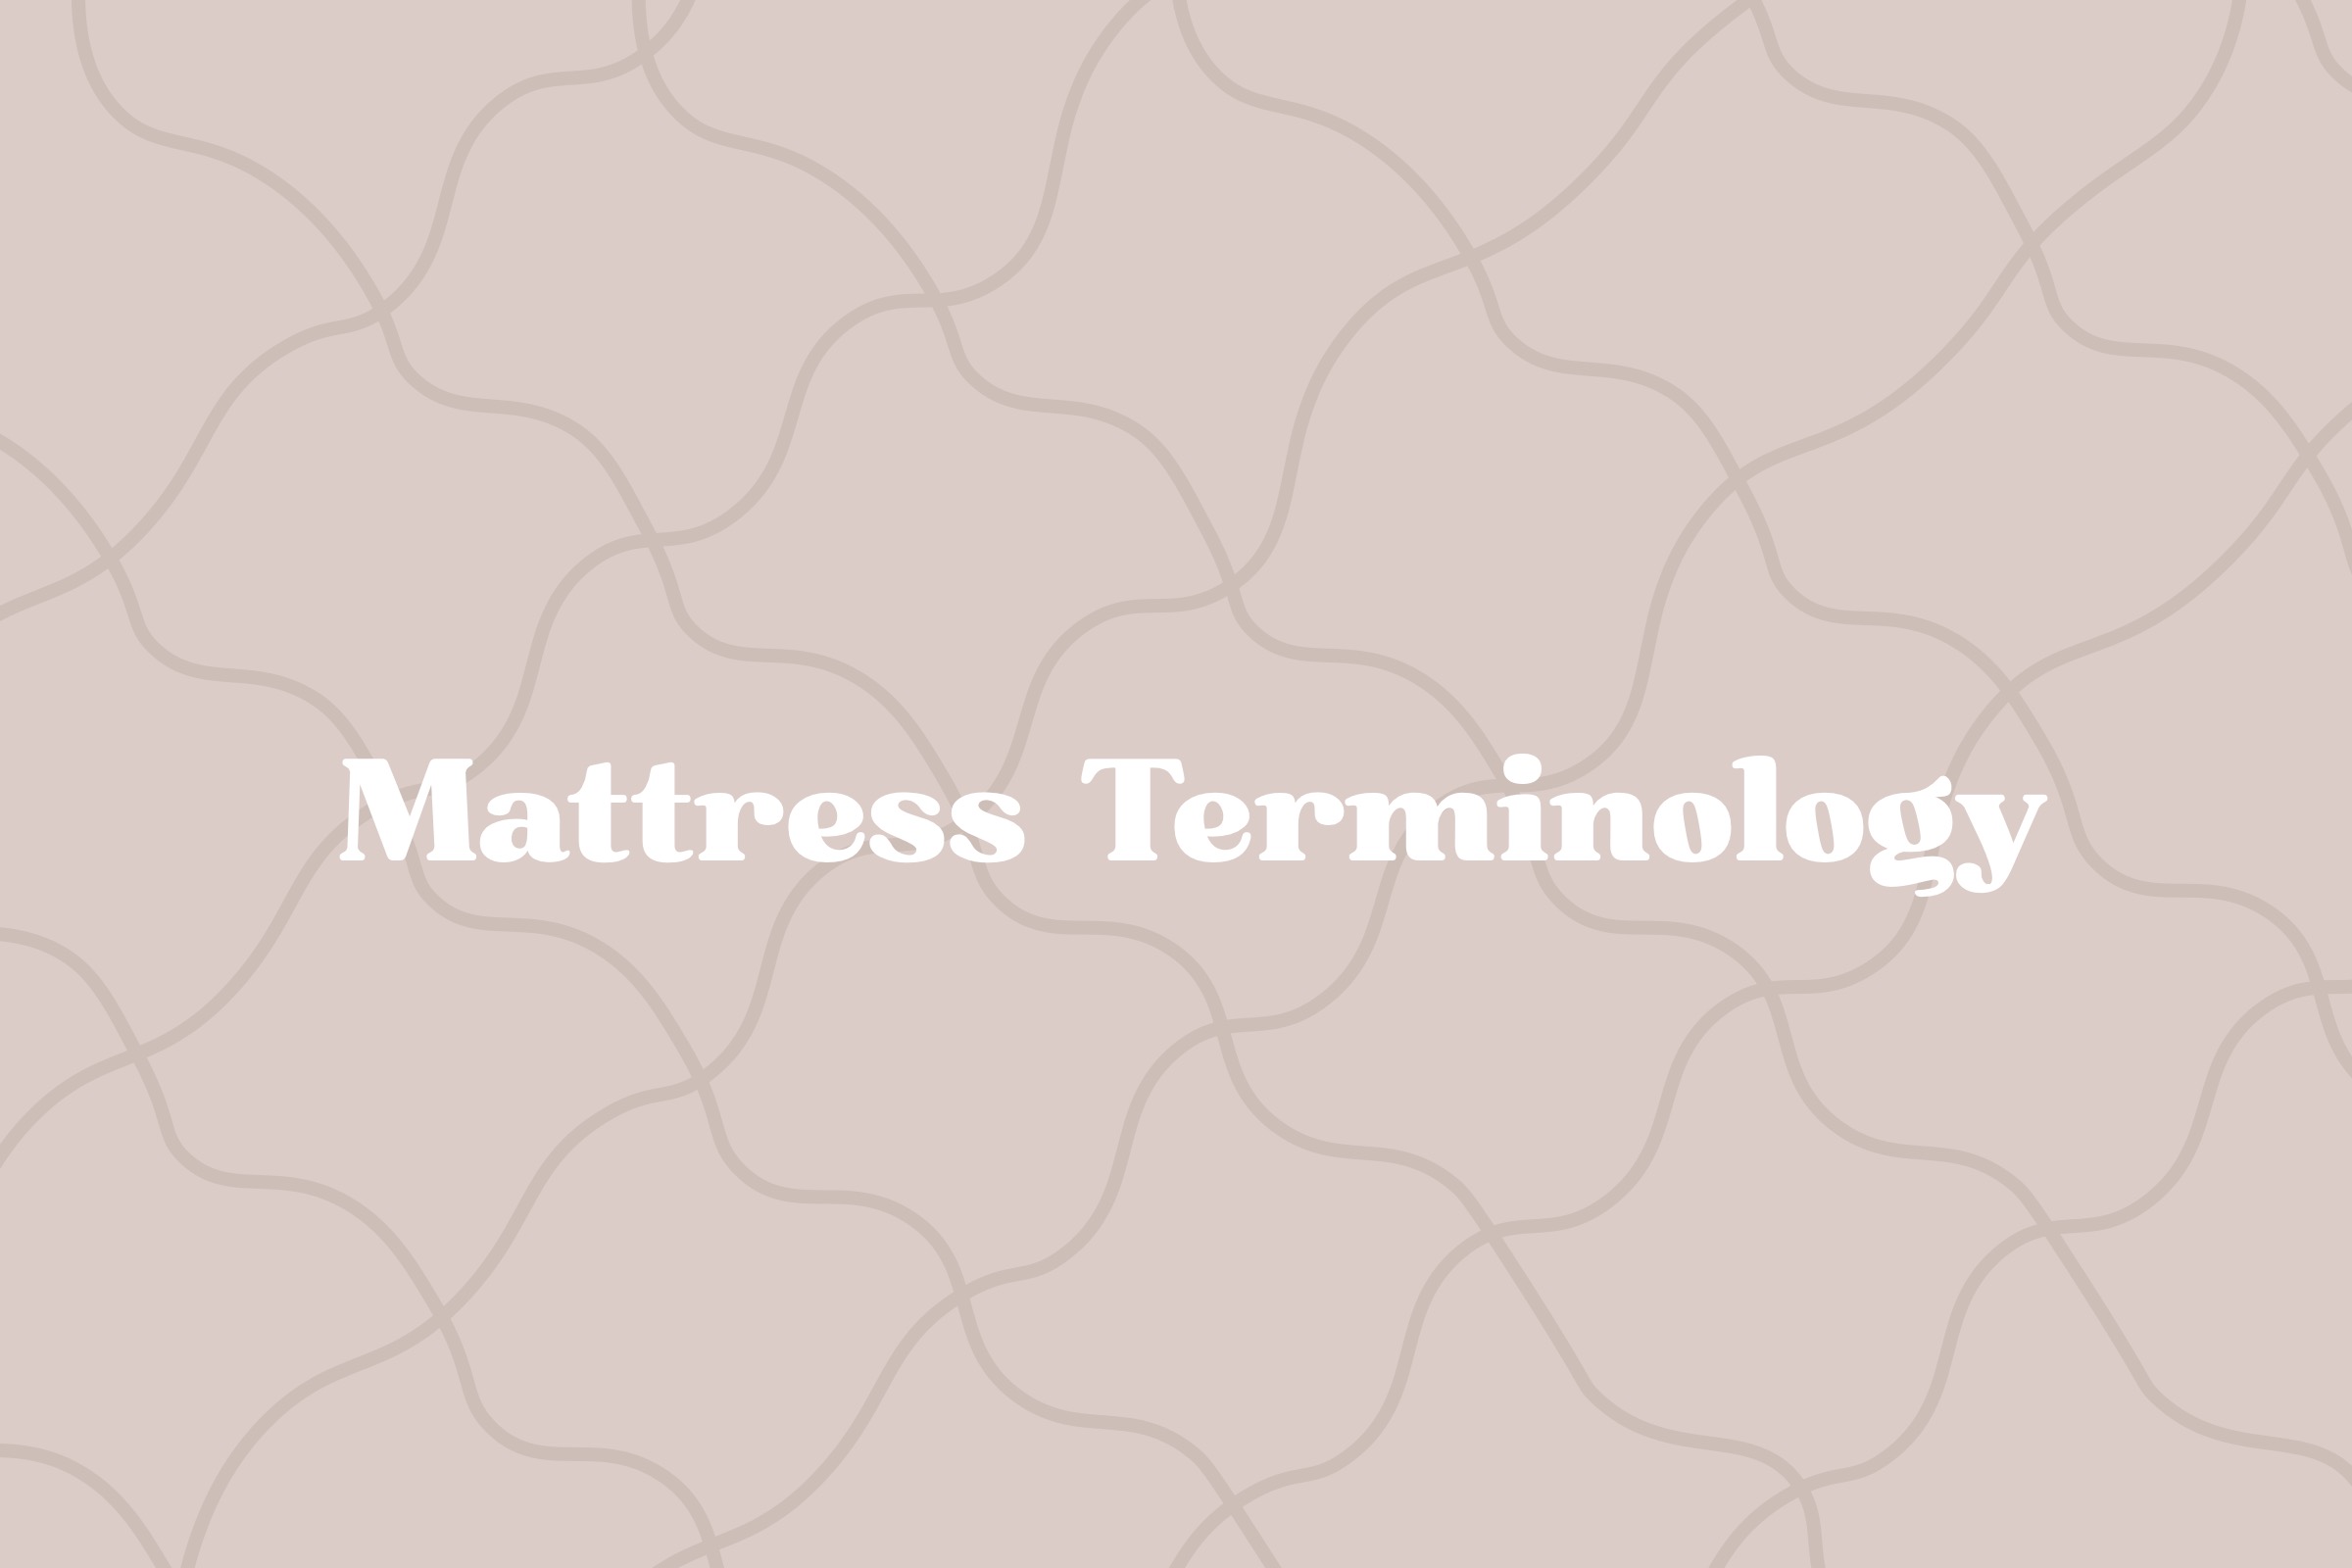 Mattress Terminology Featured Image